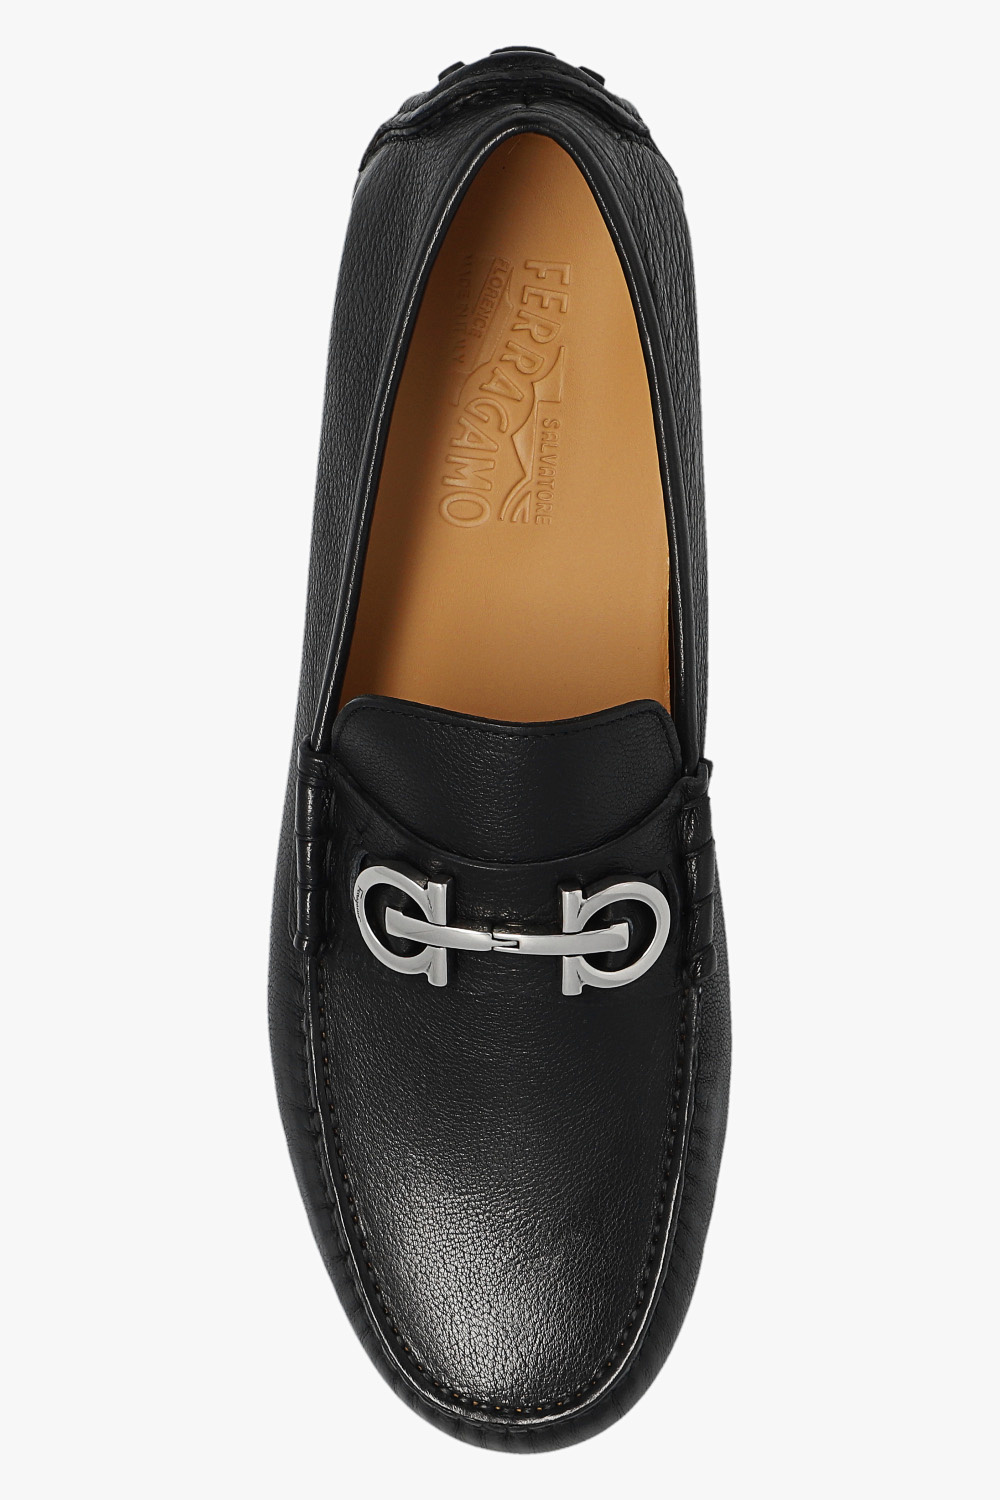 FERRAGAMO 'Grazioso' leather shoes | Men's Shoes | Vitkac